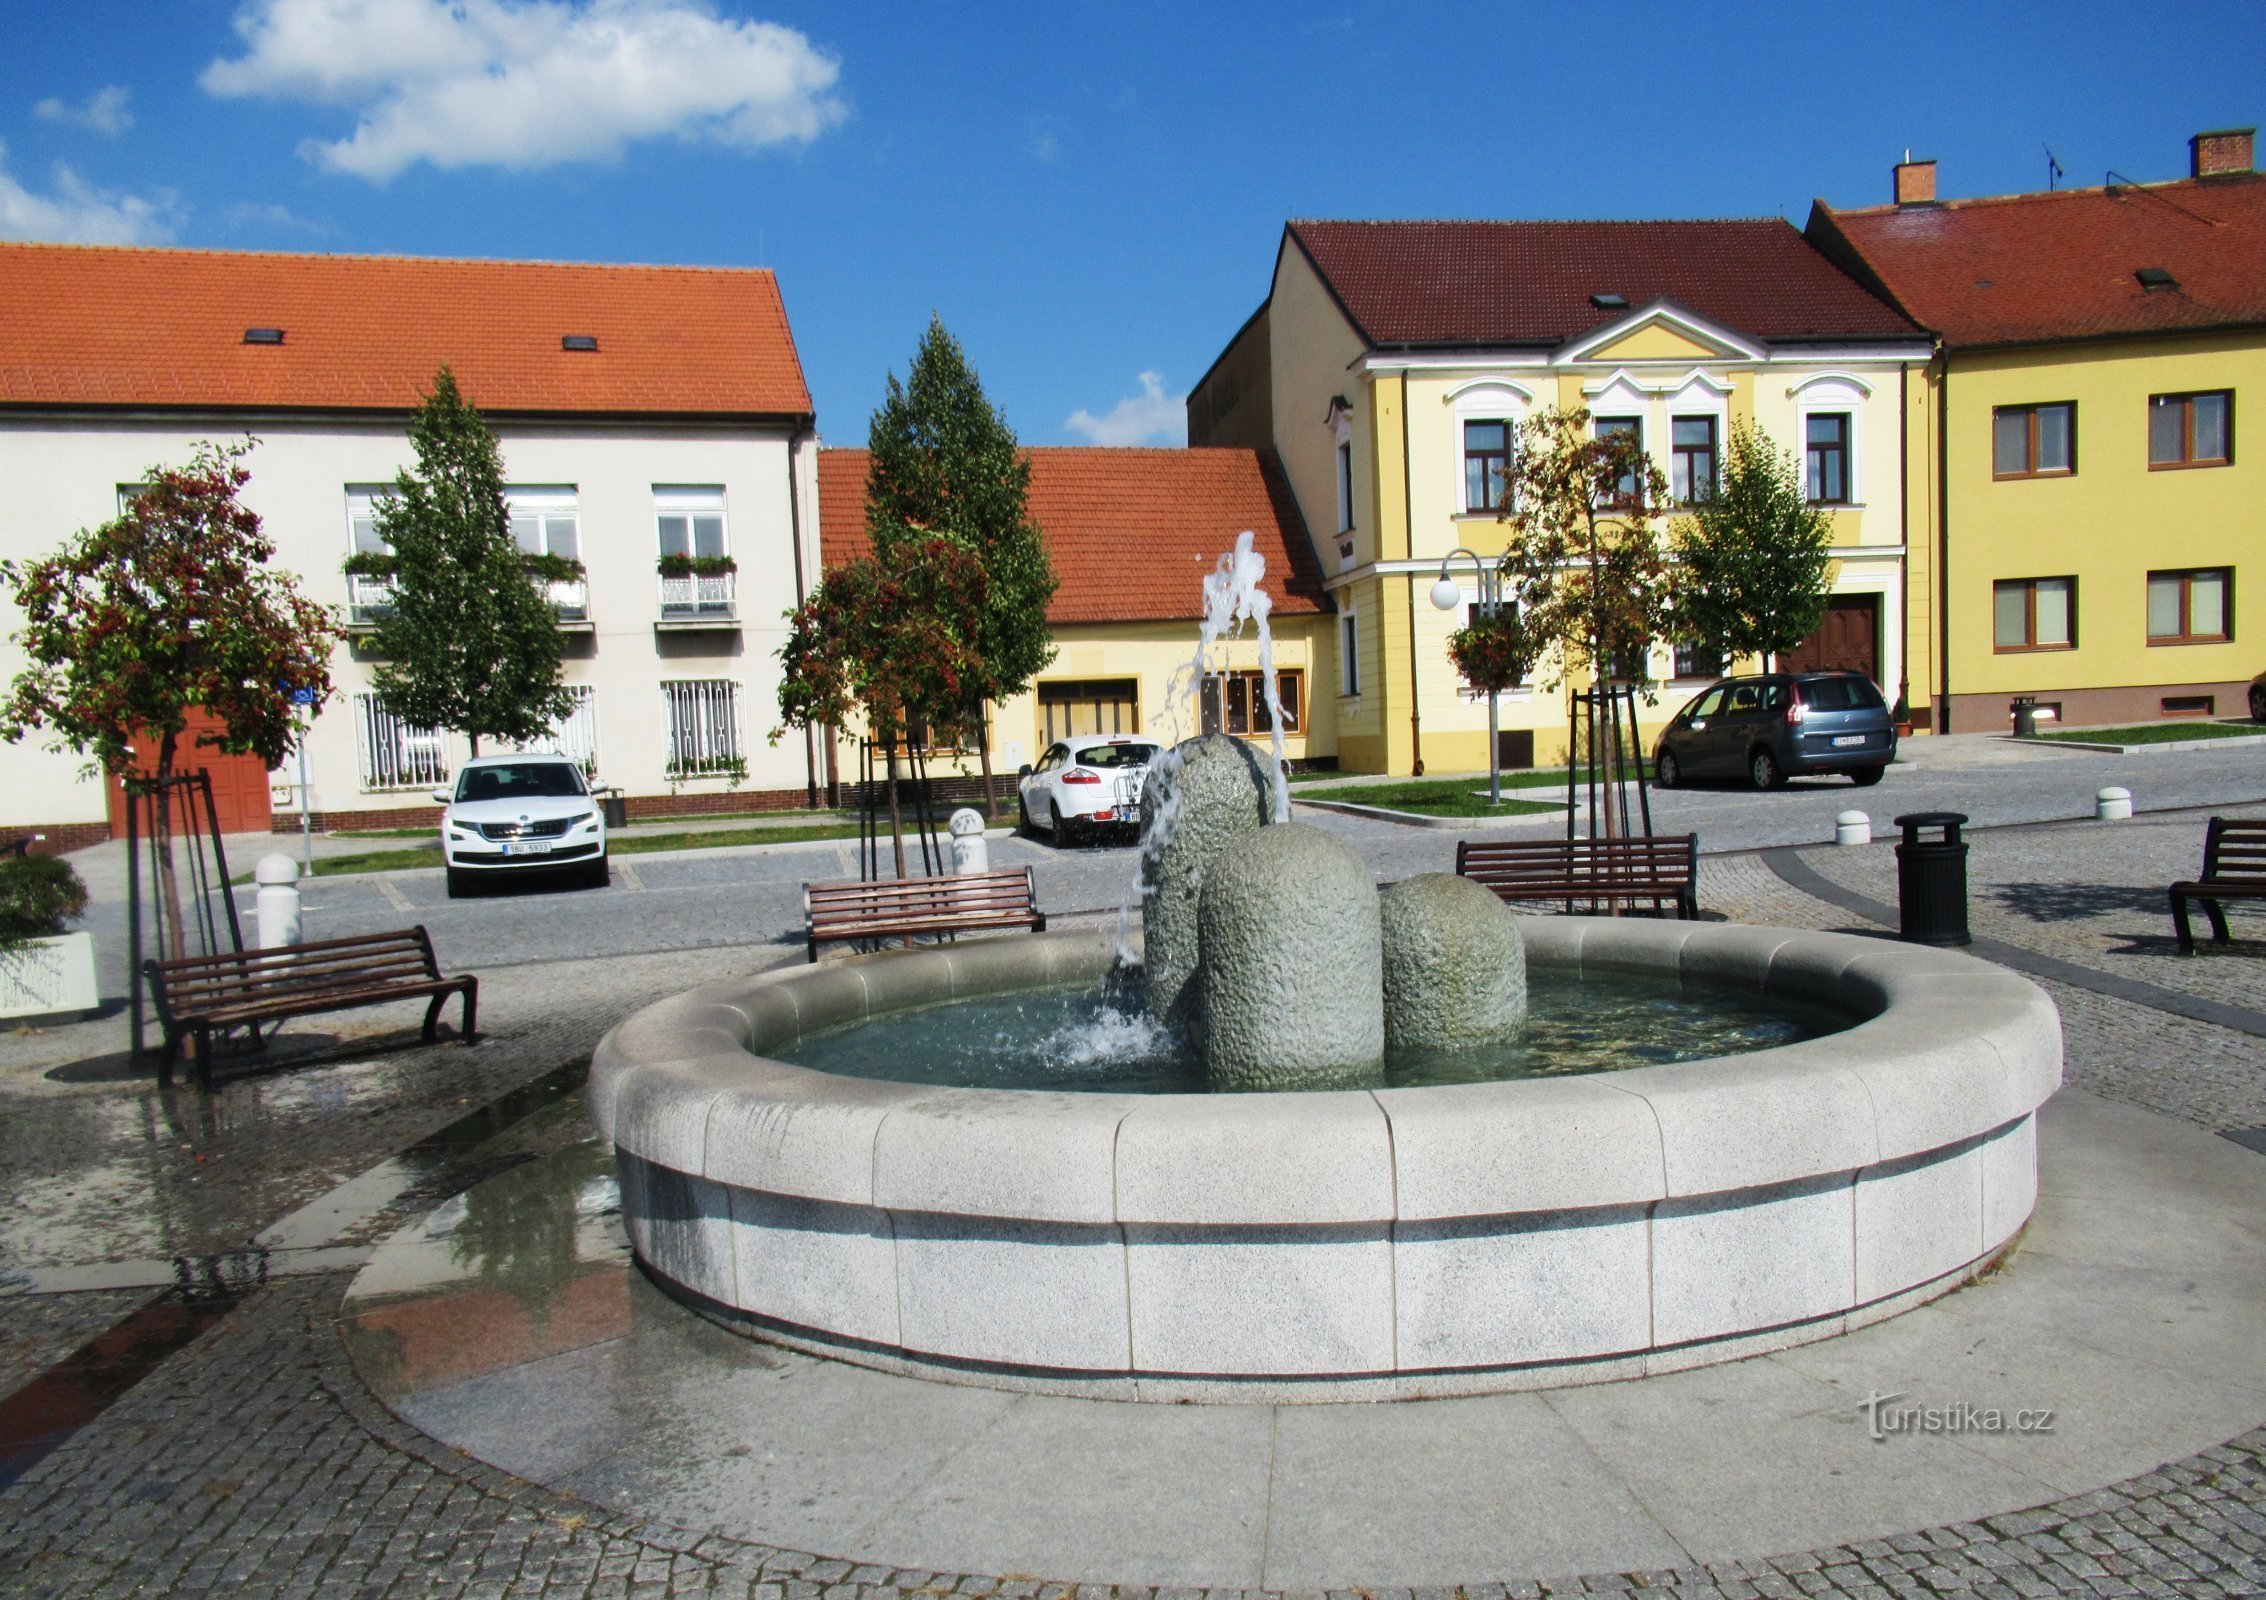 Bảo tàng Masaryk thành phố ở Veselí nad Moravou